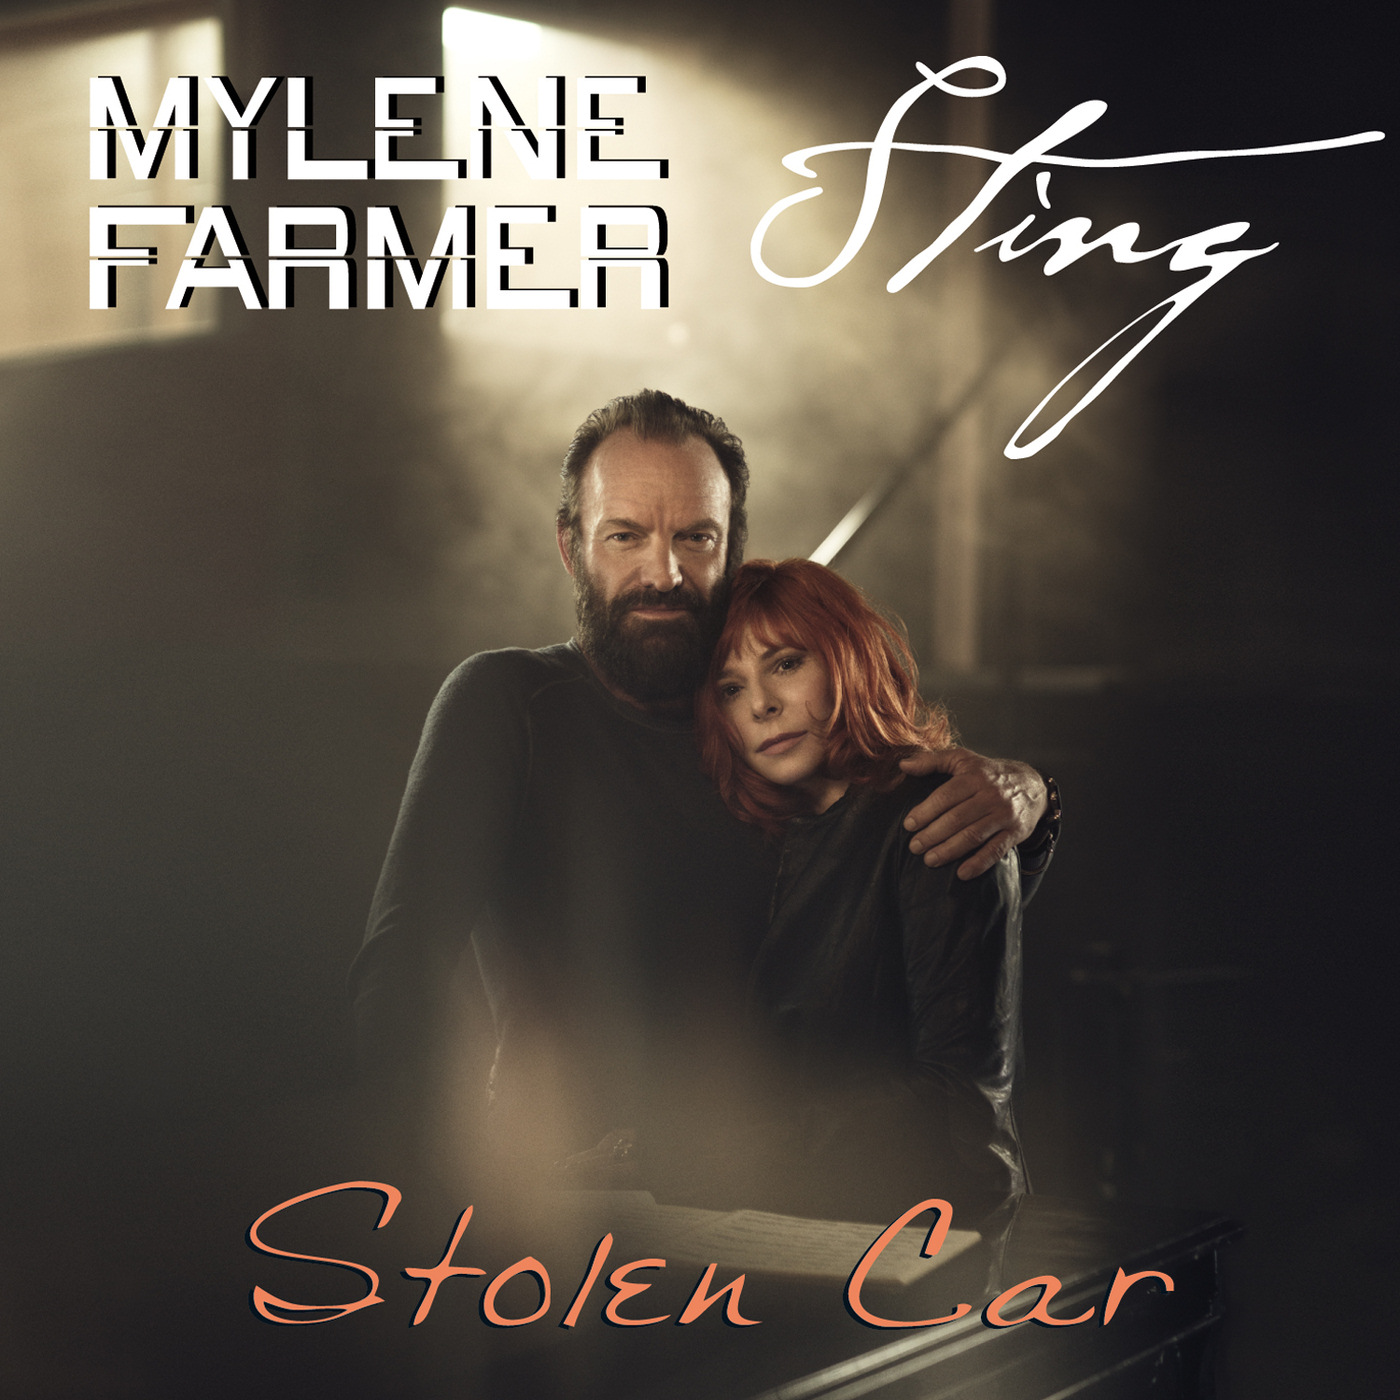 Stolen Car (avec Sting) - CD Single